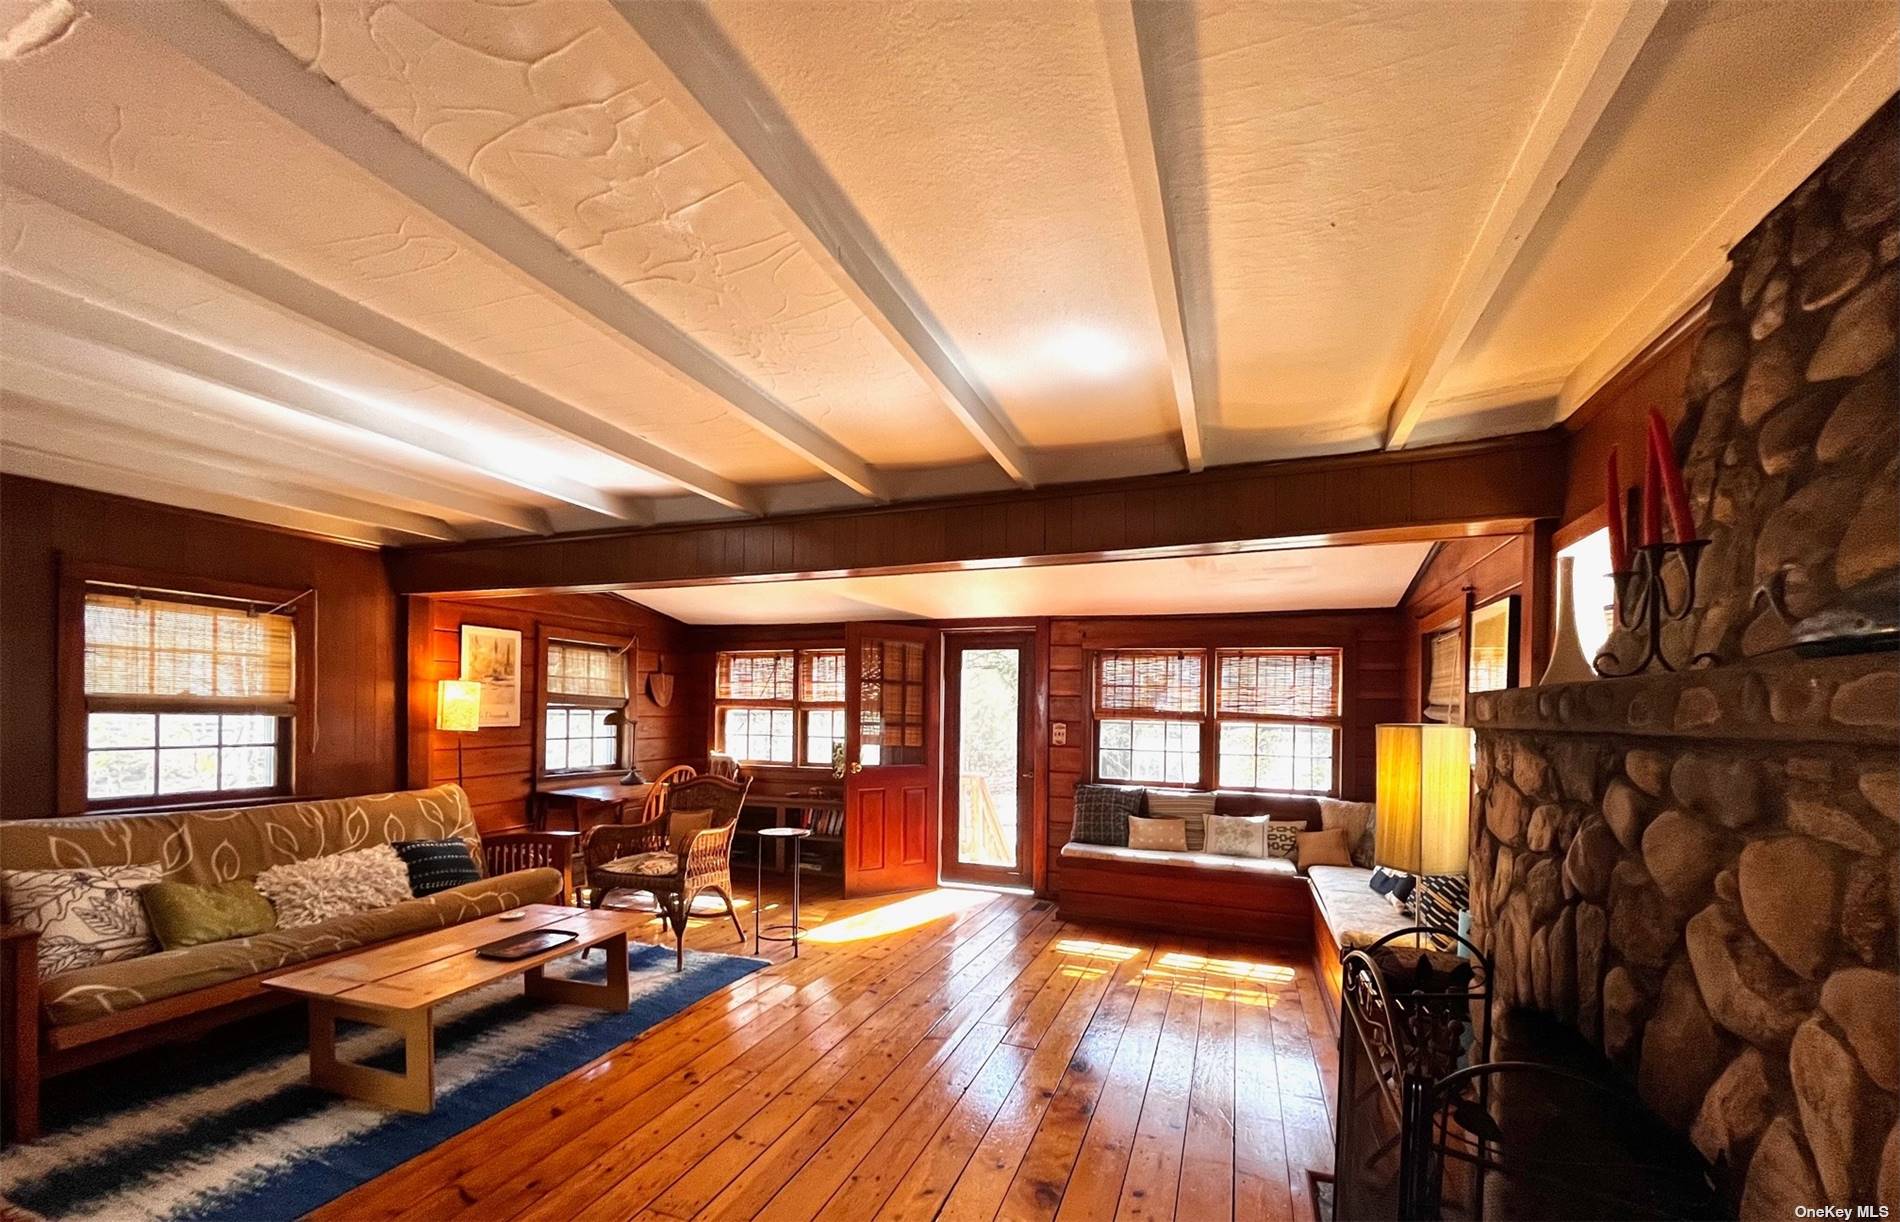 Rental Property at 13 Maidstone Road, East Hampton, Hamptons, NY - Bedrooms: 1 
Bathrooms: 1  - $27,000 MO.